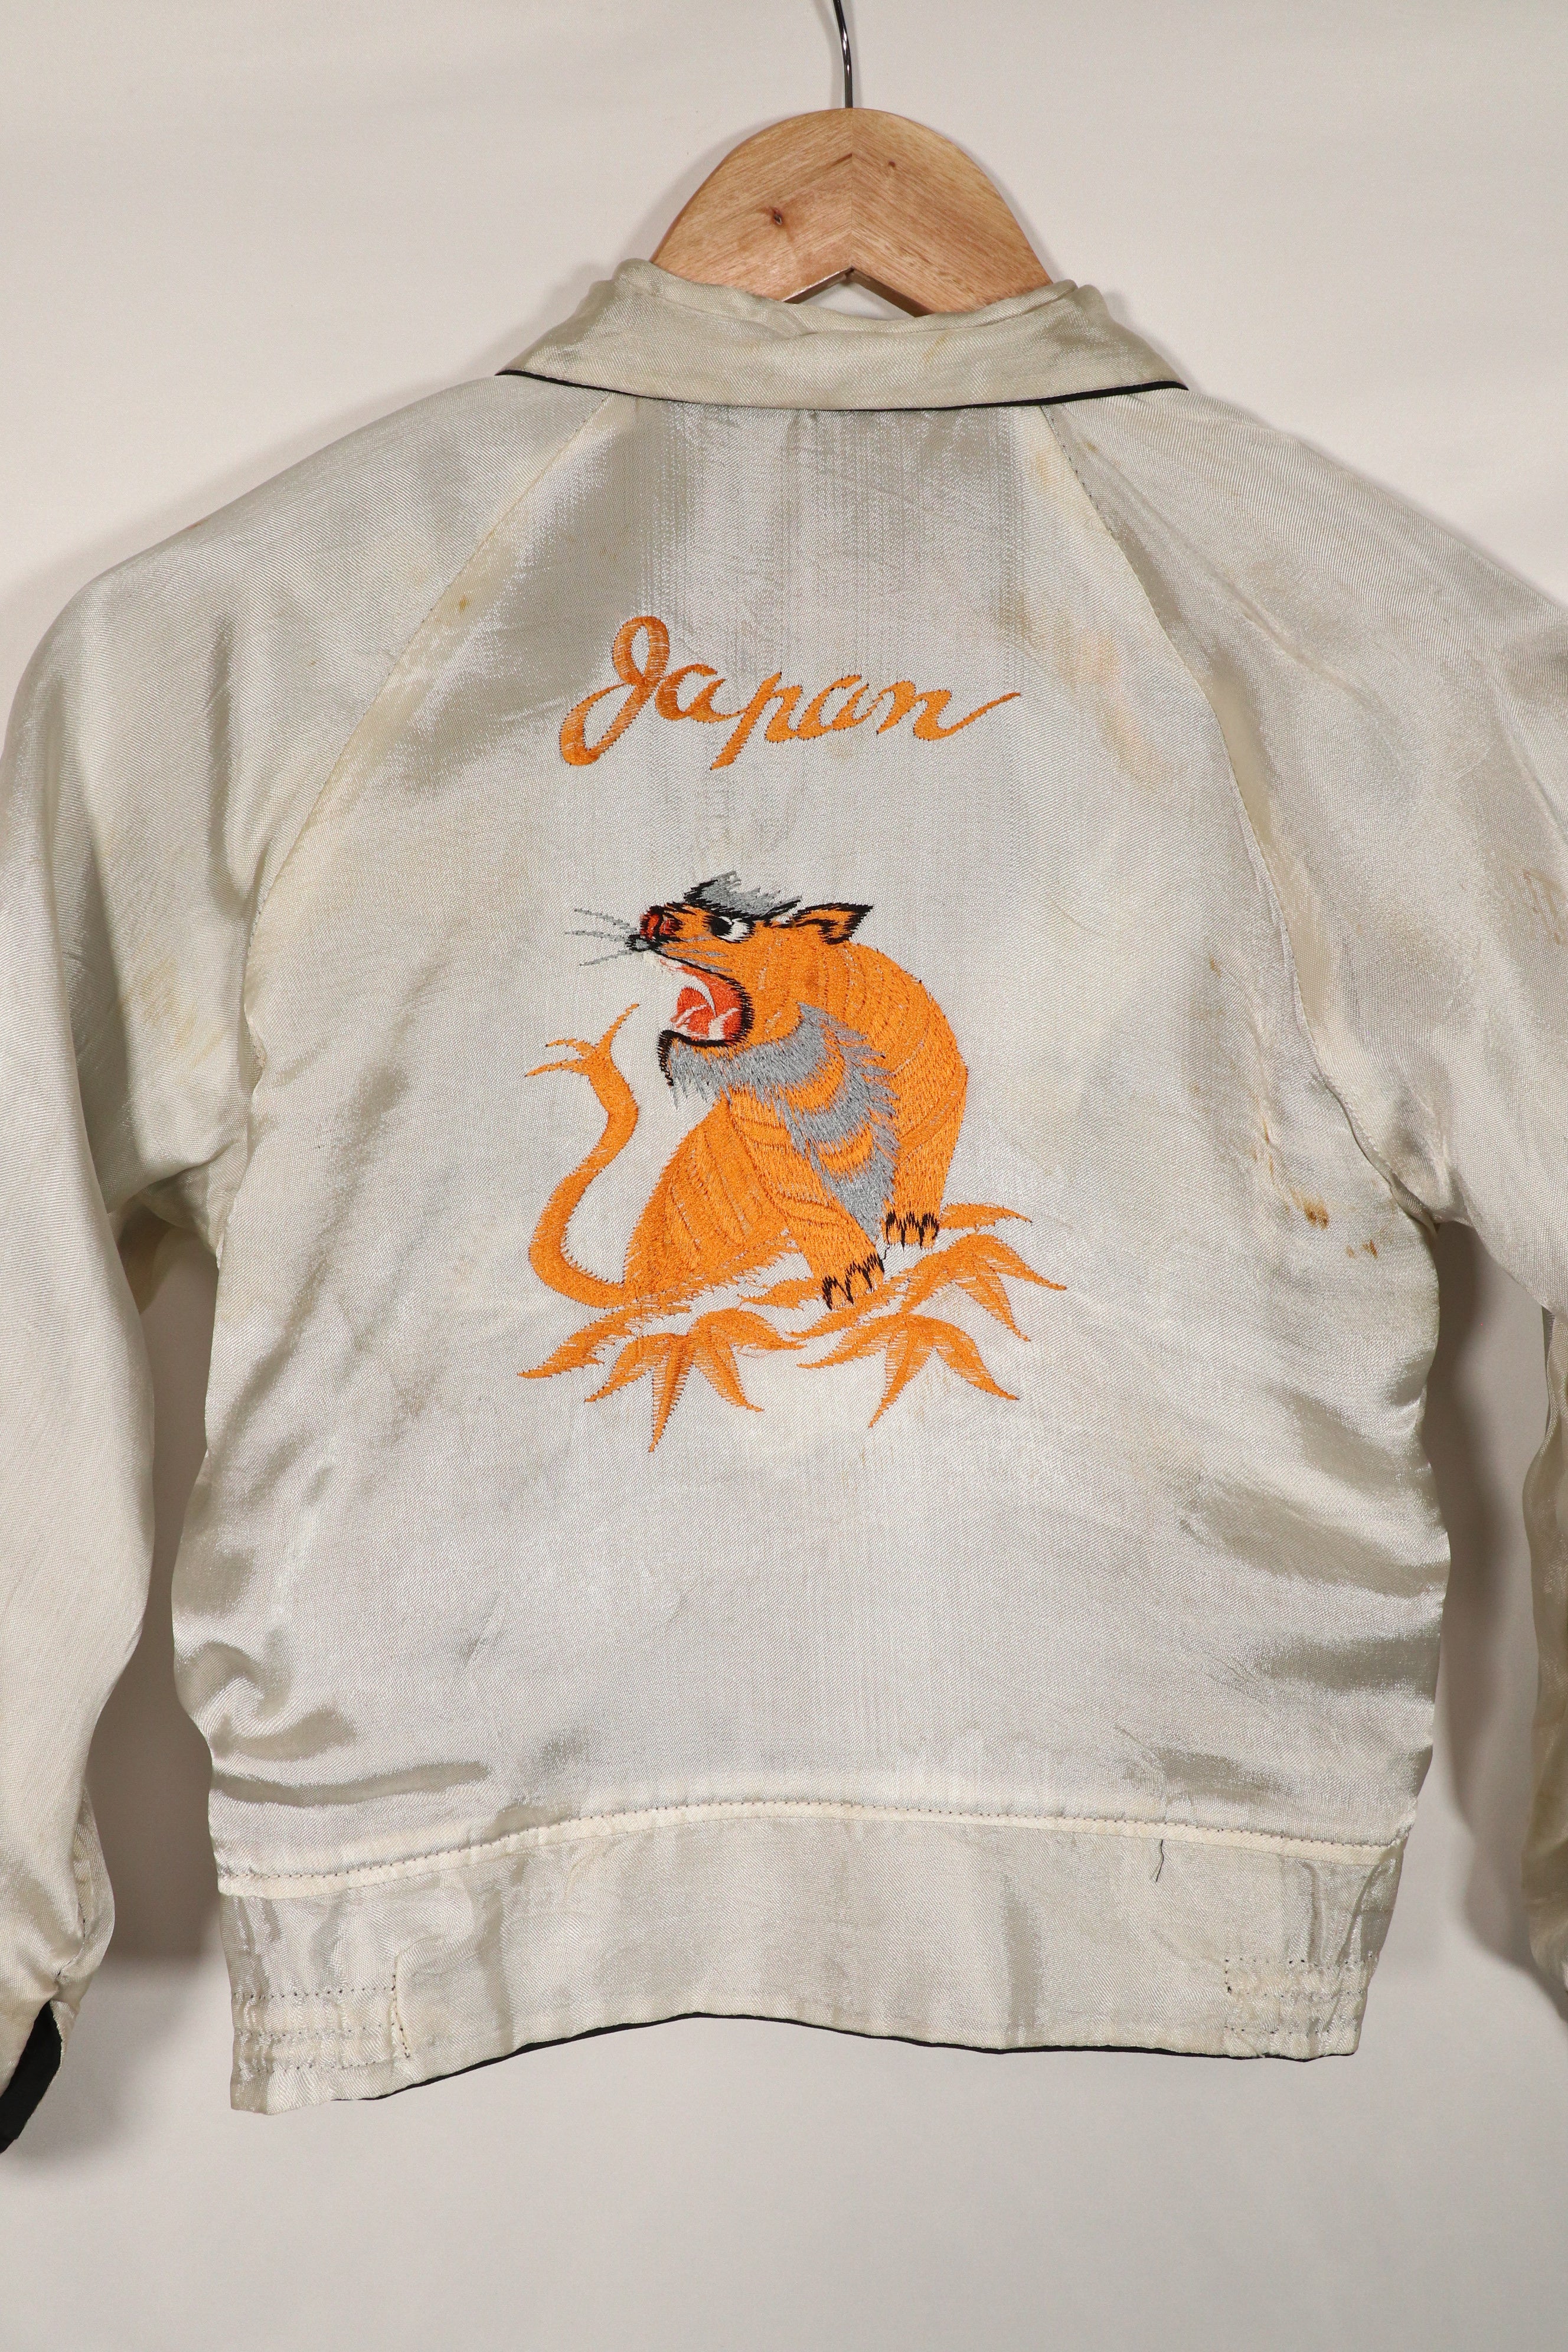 Real 1960's Okinawa made Japan Jacket Kids size used